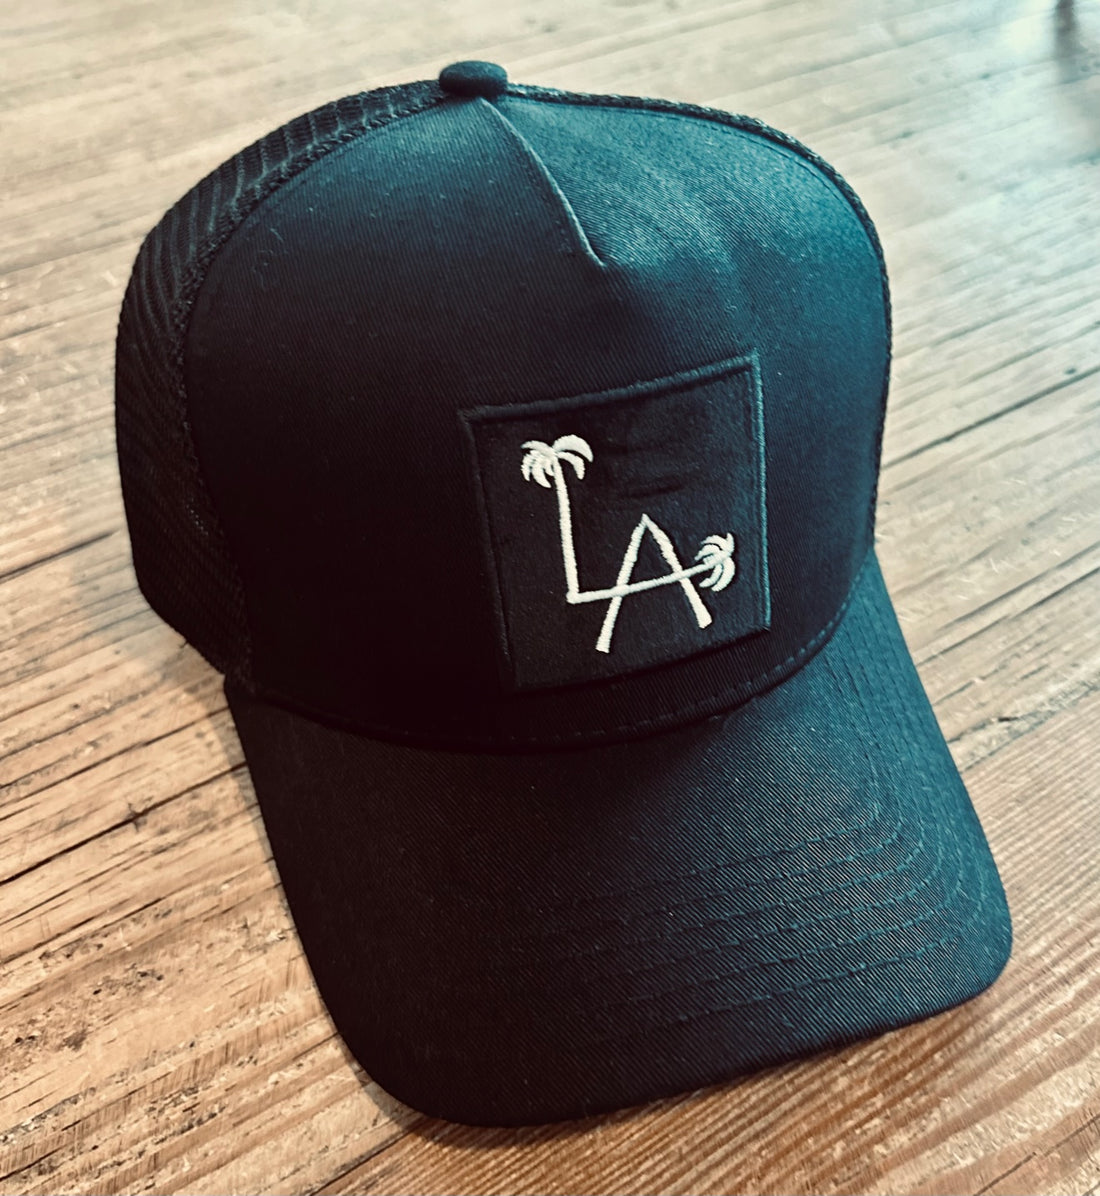 LA Hat (Black)